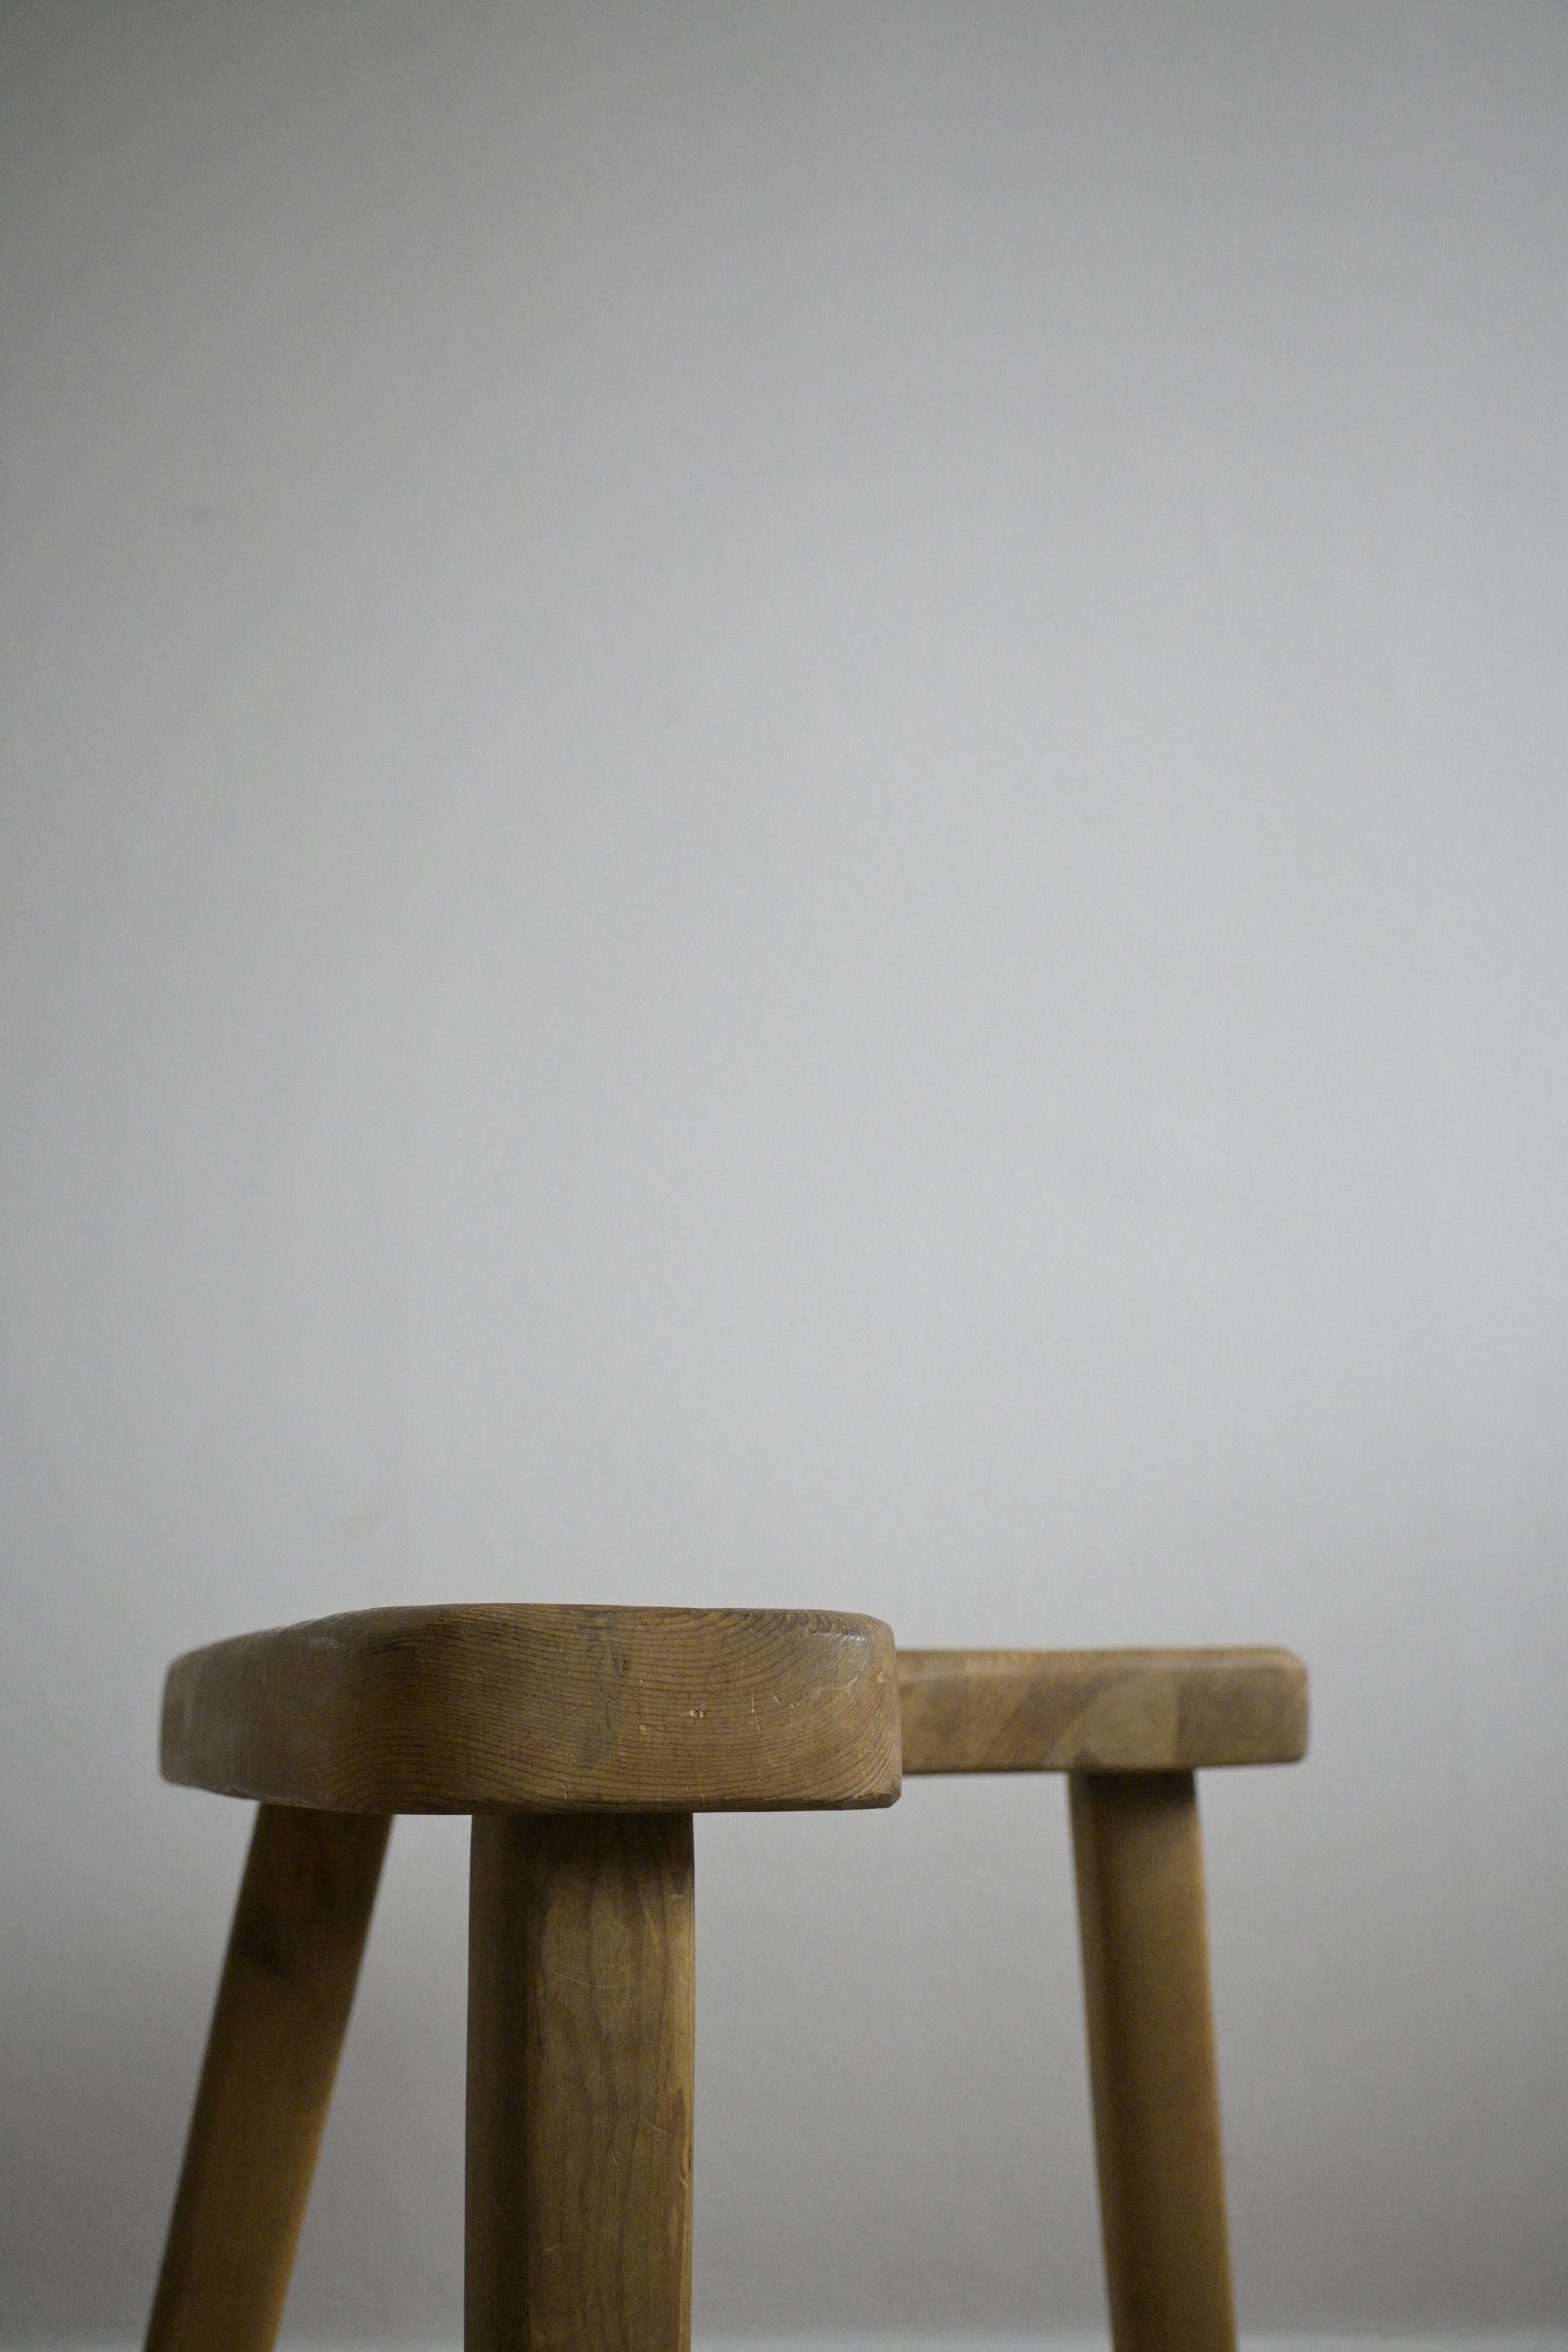 Unsymmetric Pine Stool or Side Table by Stig Sandqvist, Vemdalen, Sweden 1950s 2